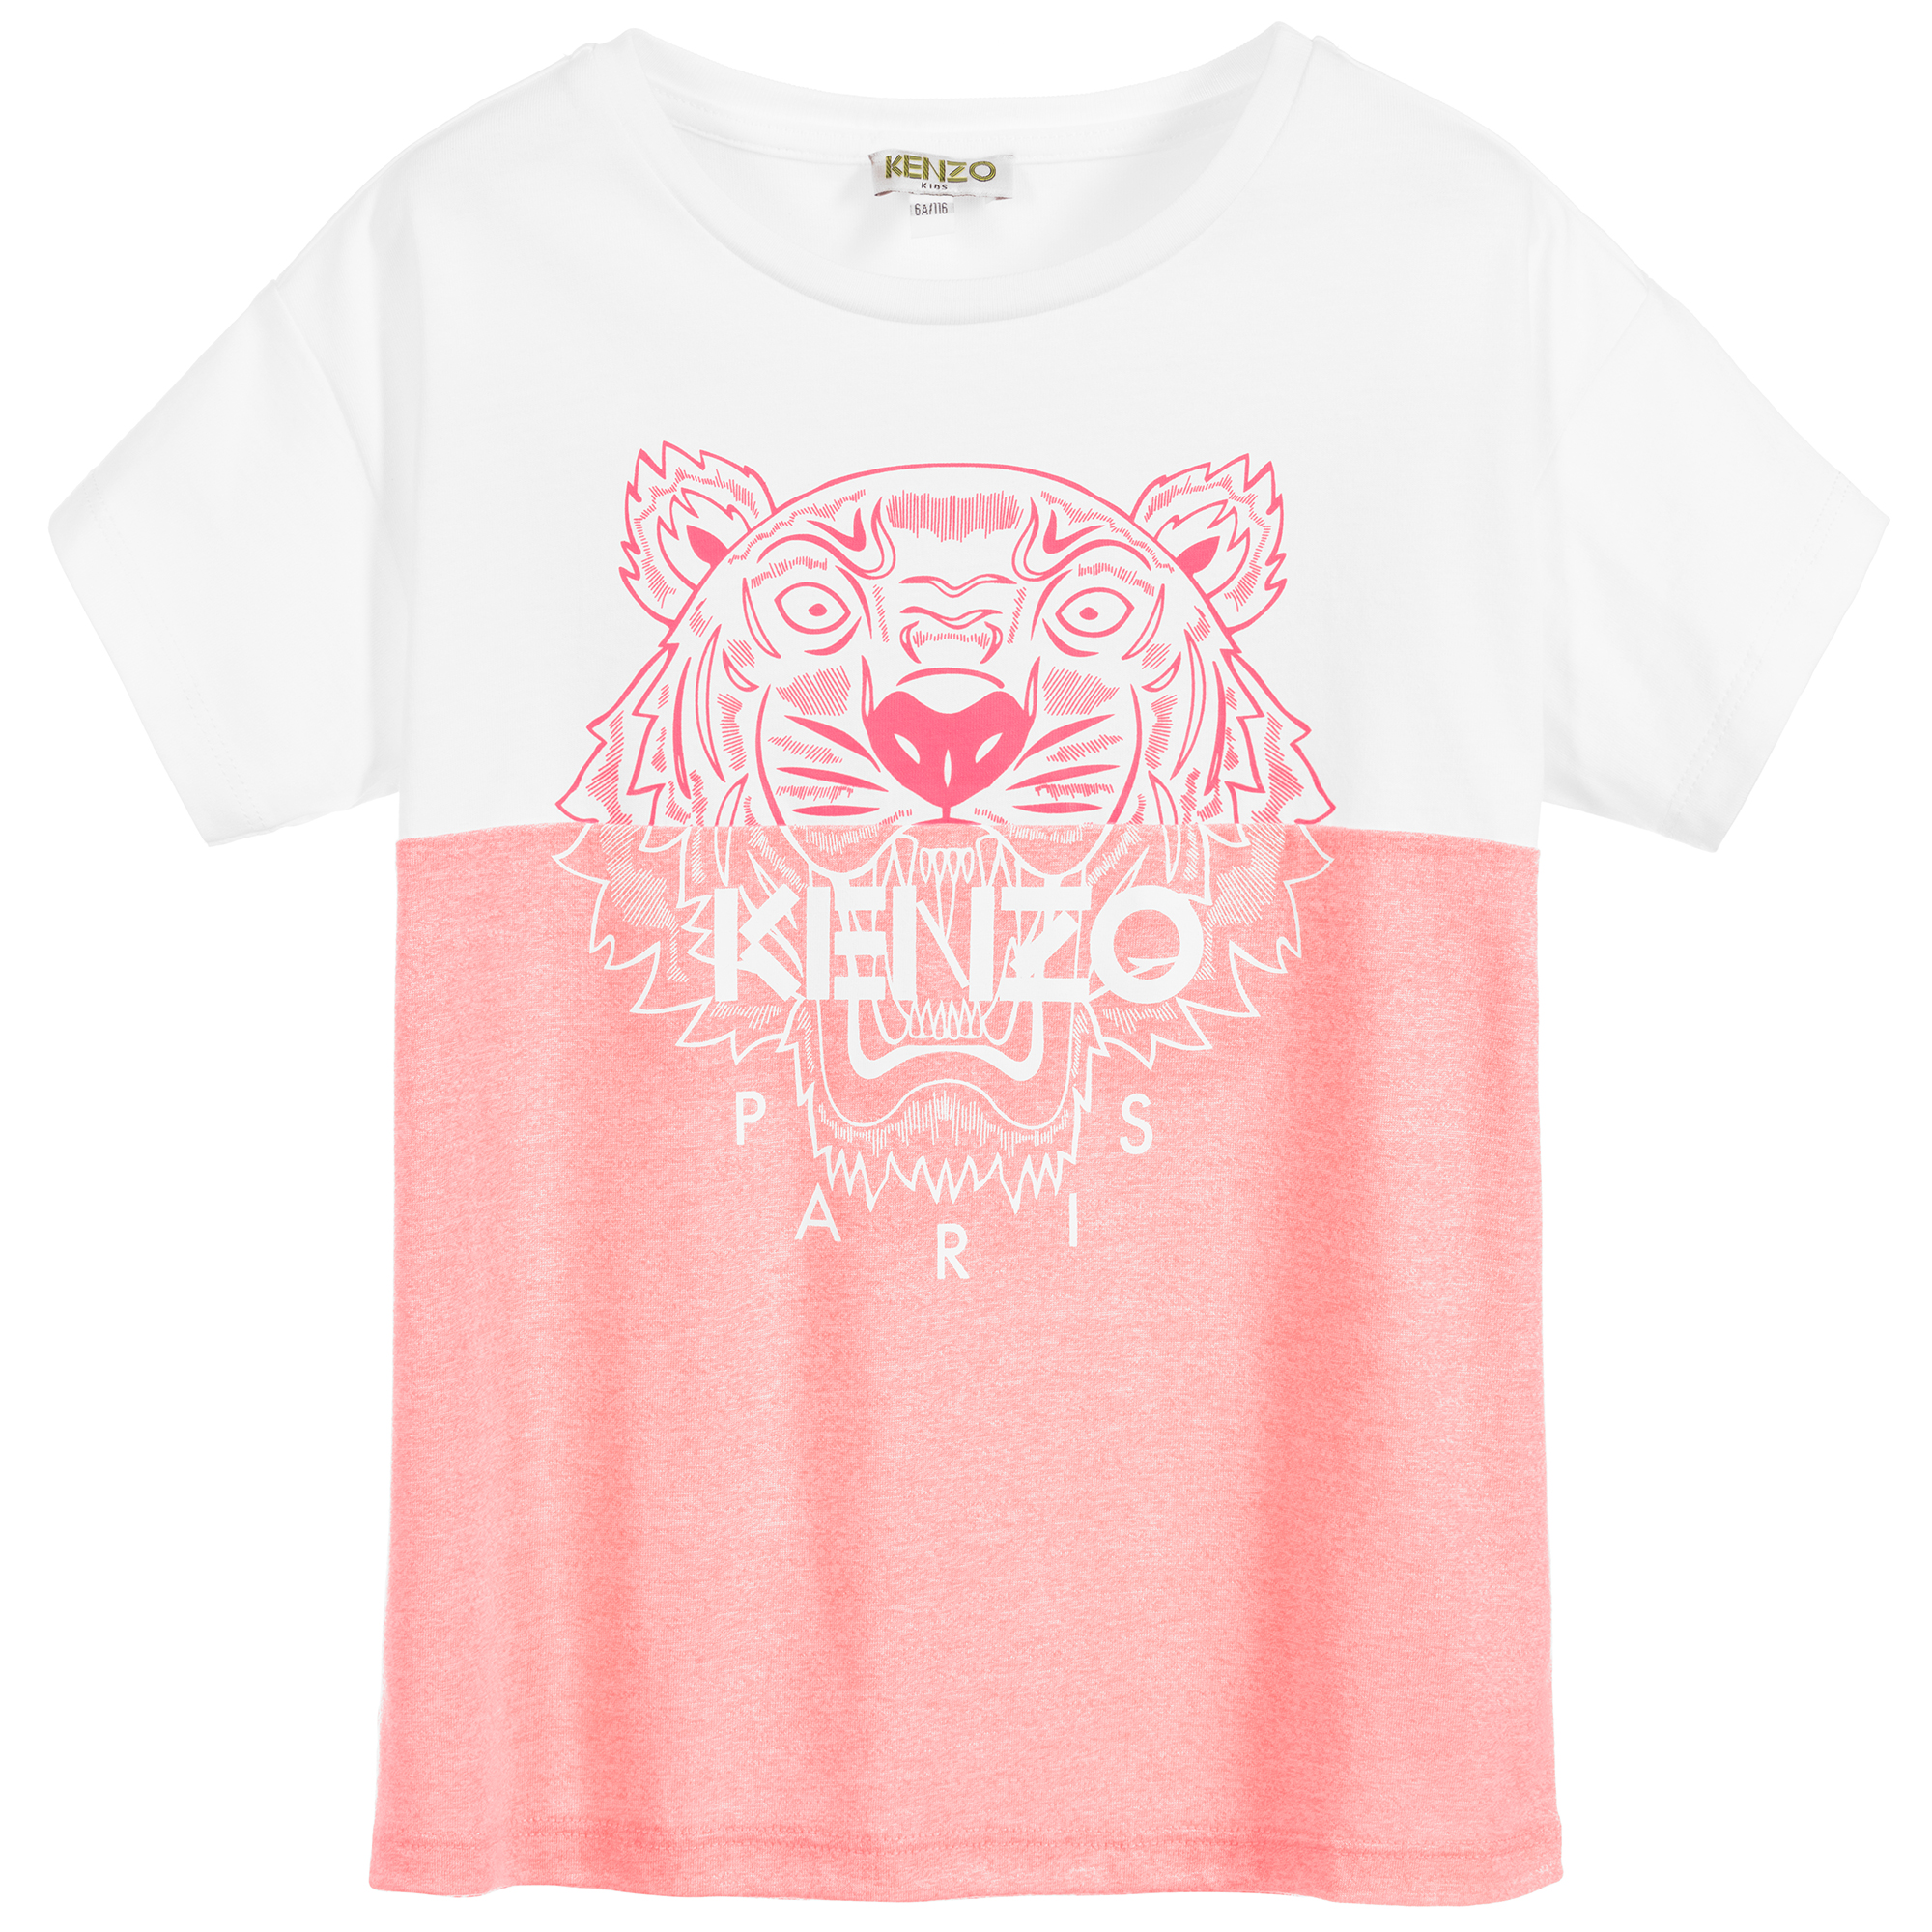 kenzo shirt girls